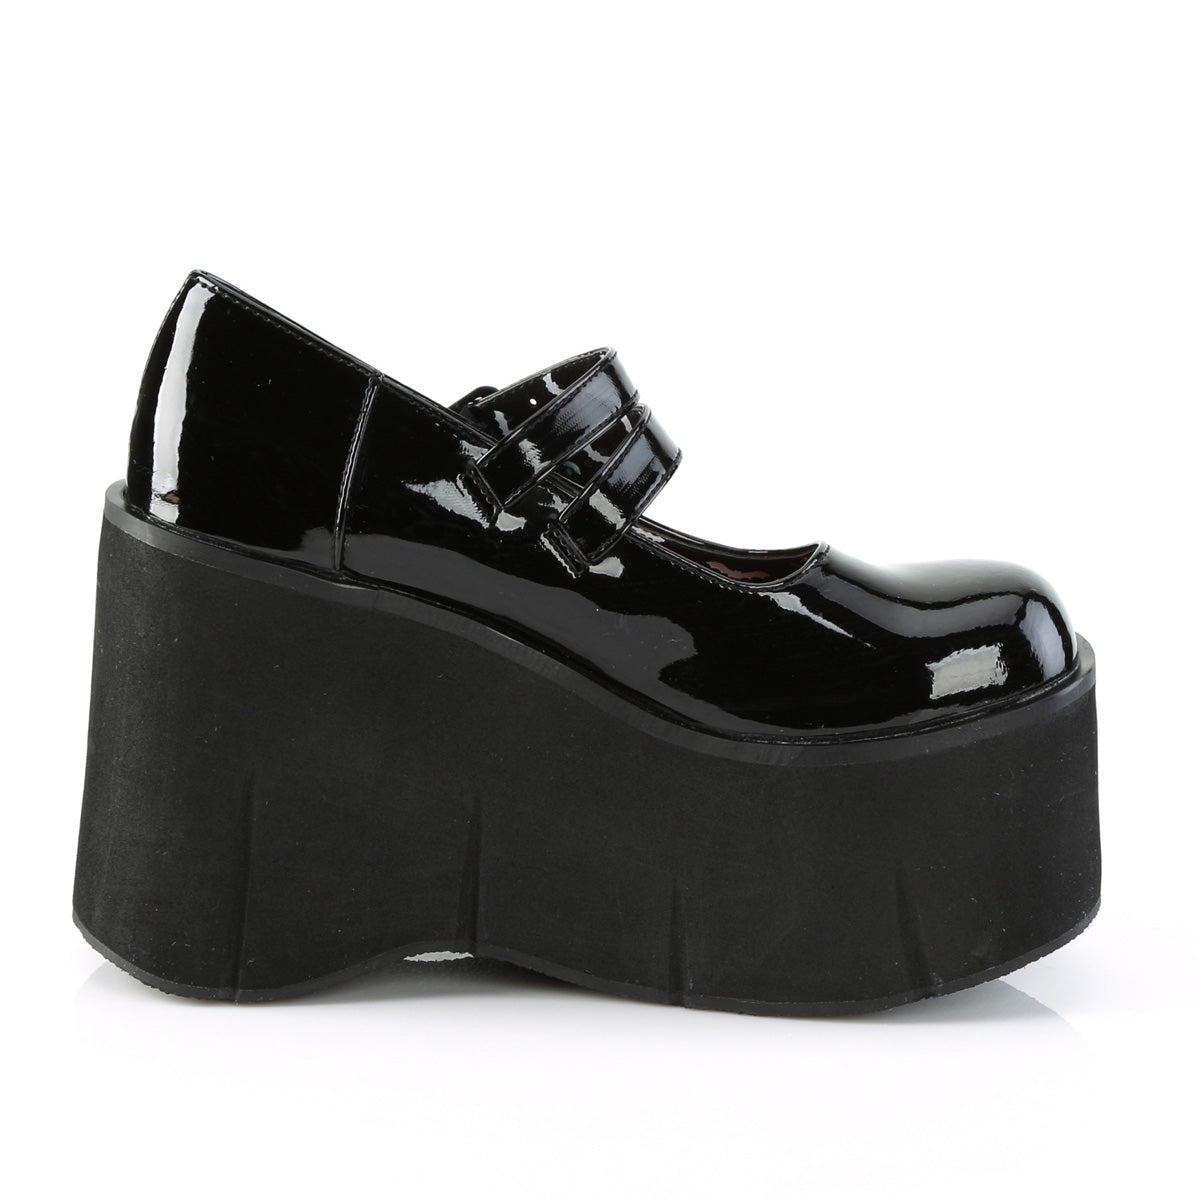 KERA-08 Demonia Black Patent Women's Heels & Platform Shoes [Demonia Cult Alternative Footwear]